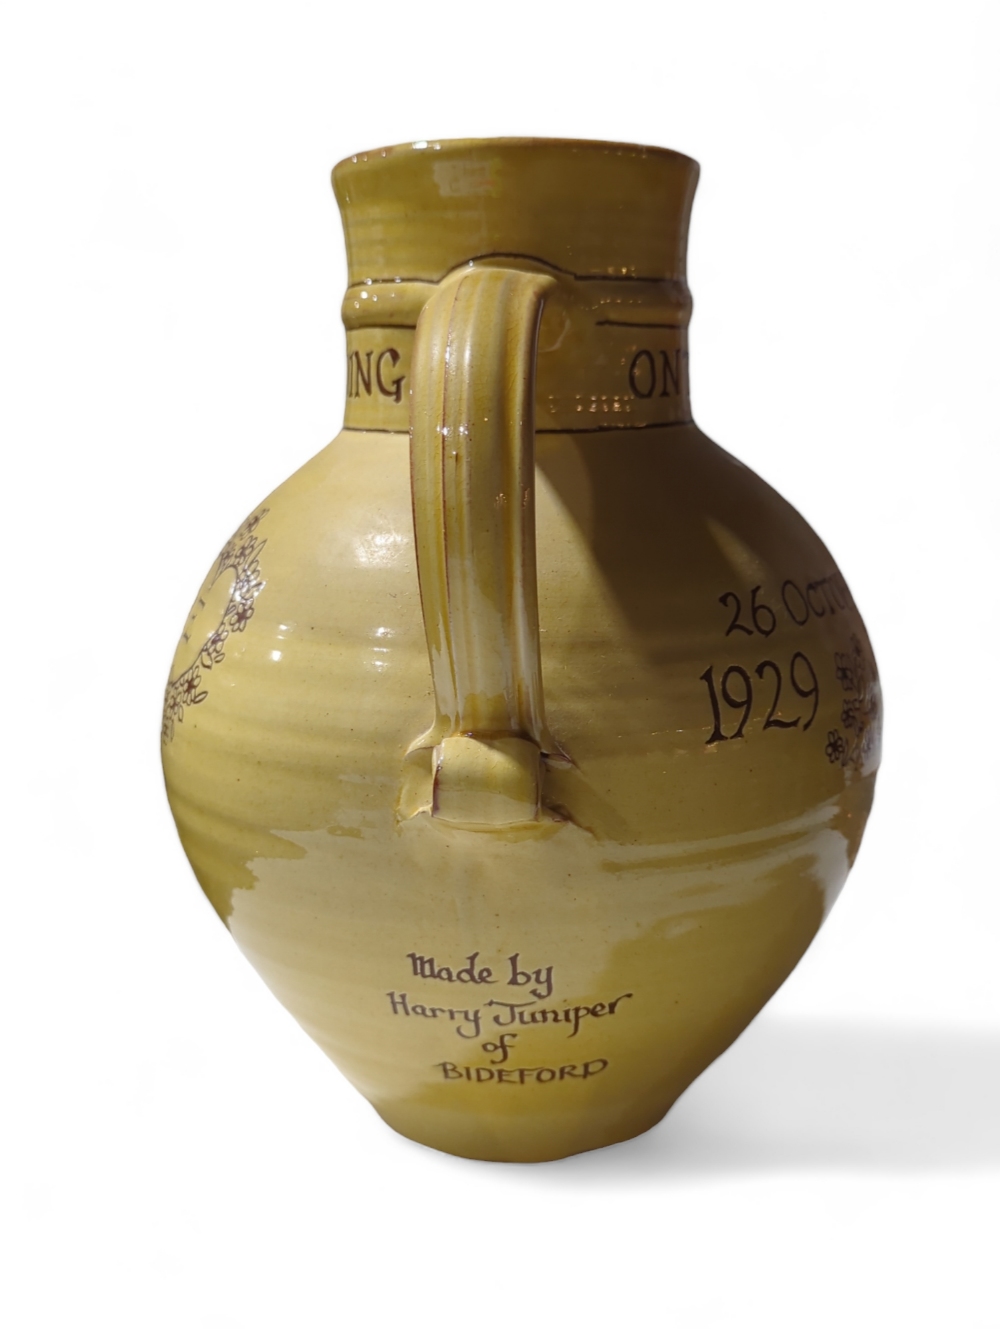 A Golden Wedding celebration jug, terracotta with - Image 3 of 4